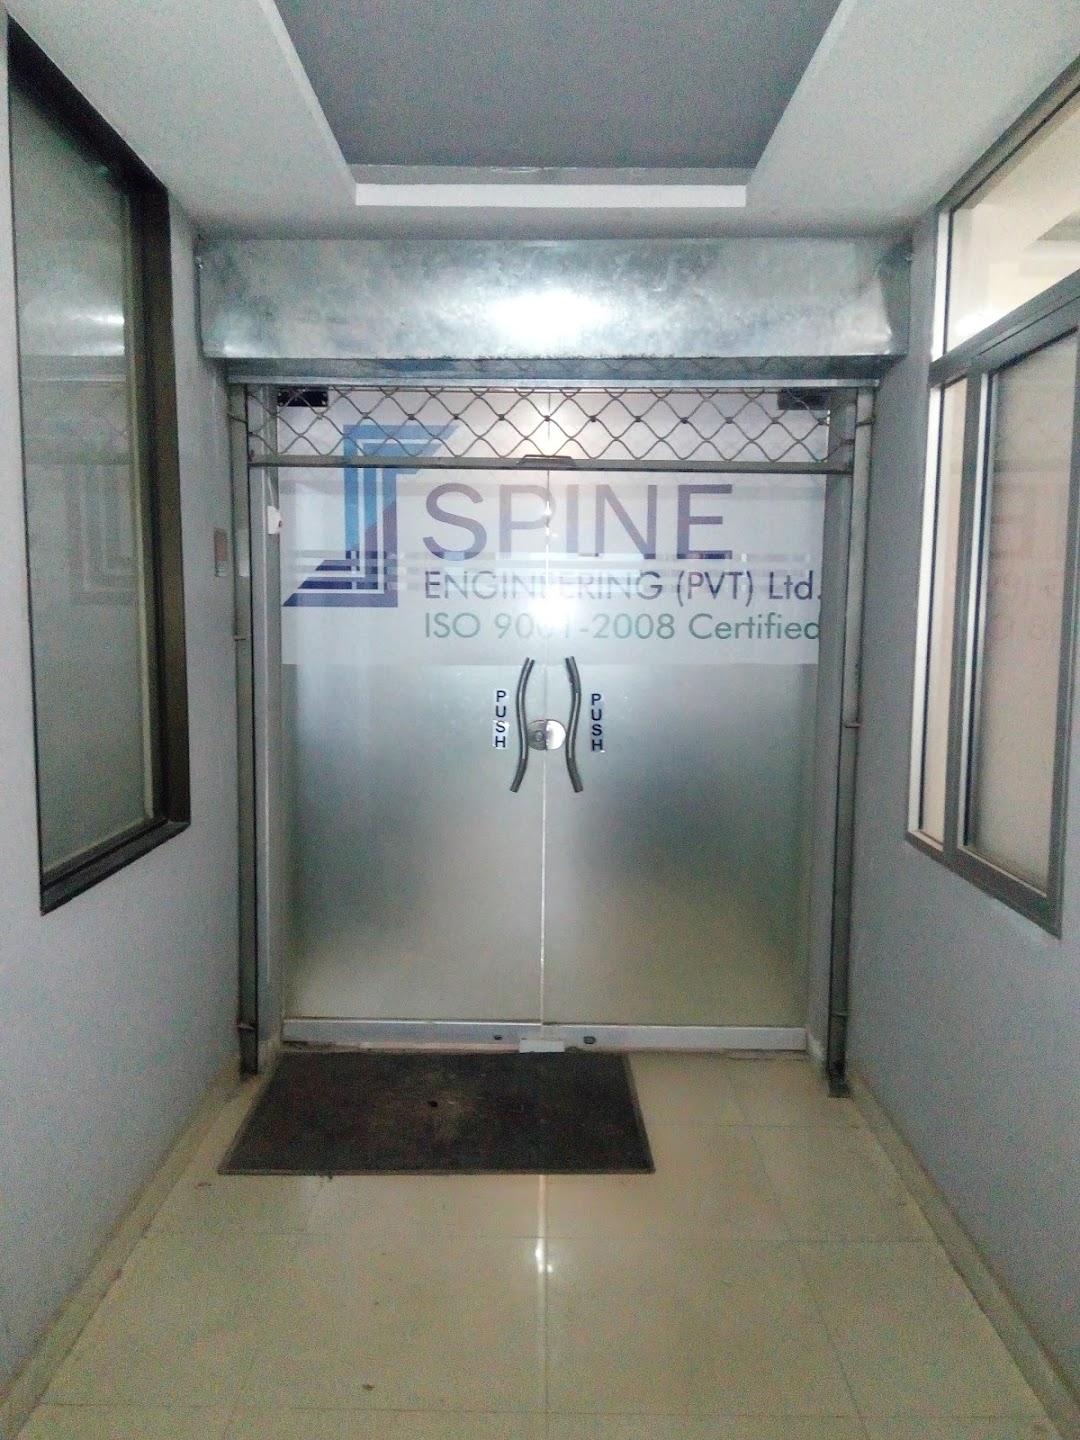 Spine Engineering (Pvt) Ltd